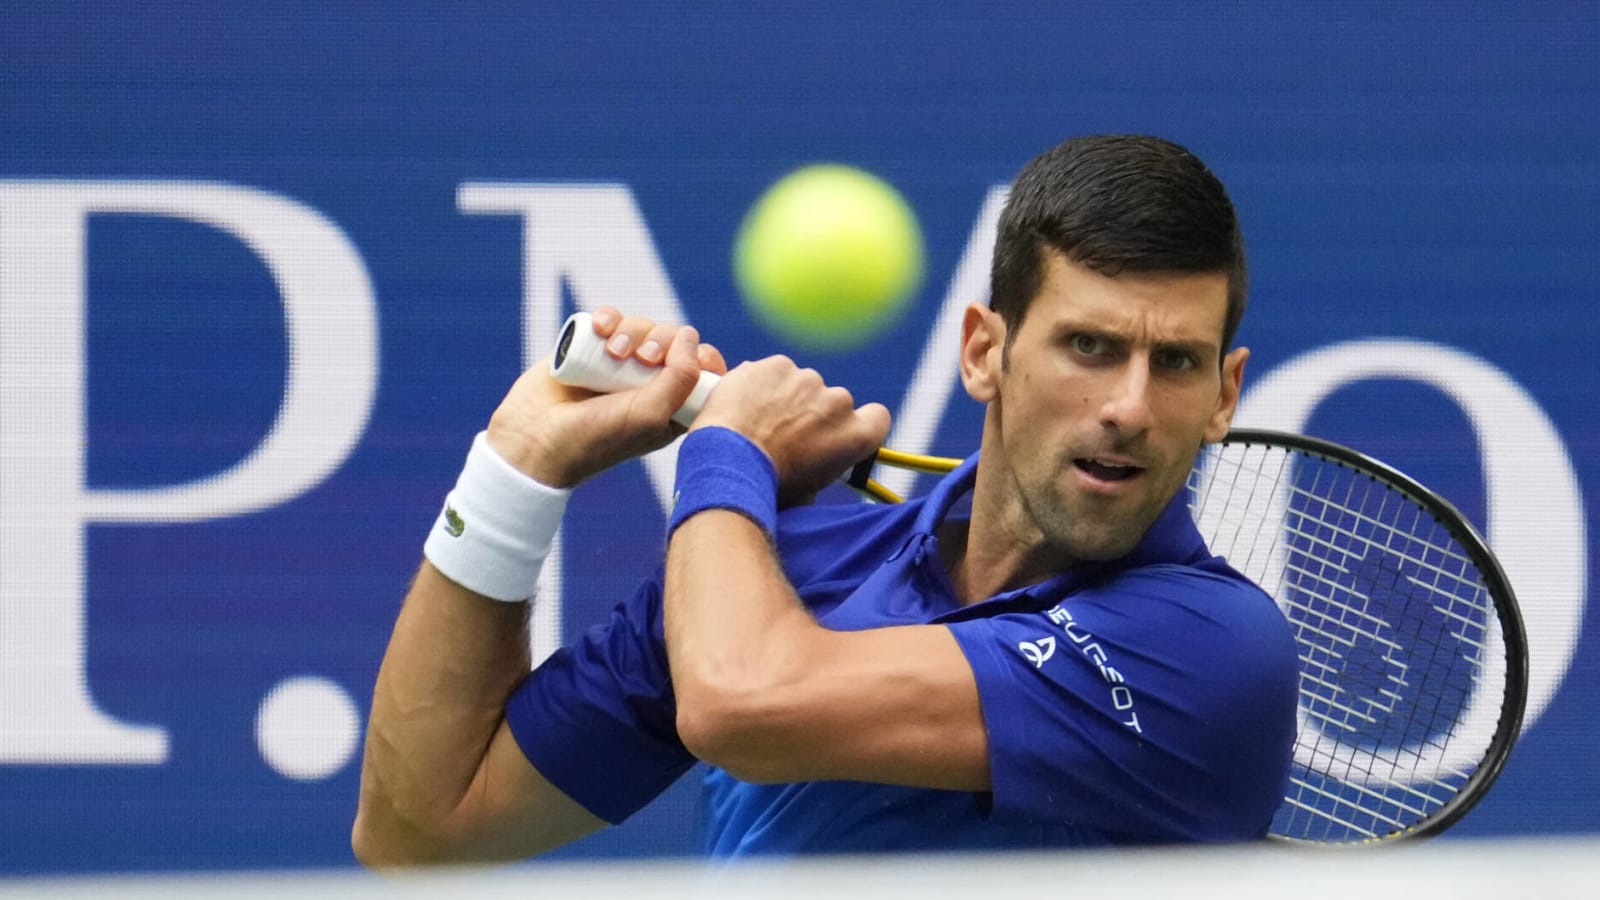 Djokovic replaced as No. 1 after Dubai Championships loss